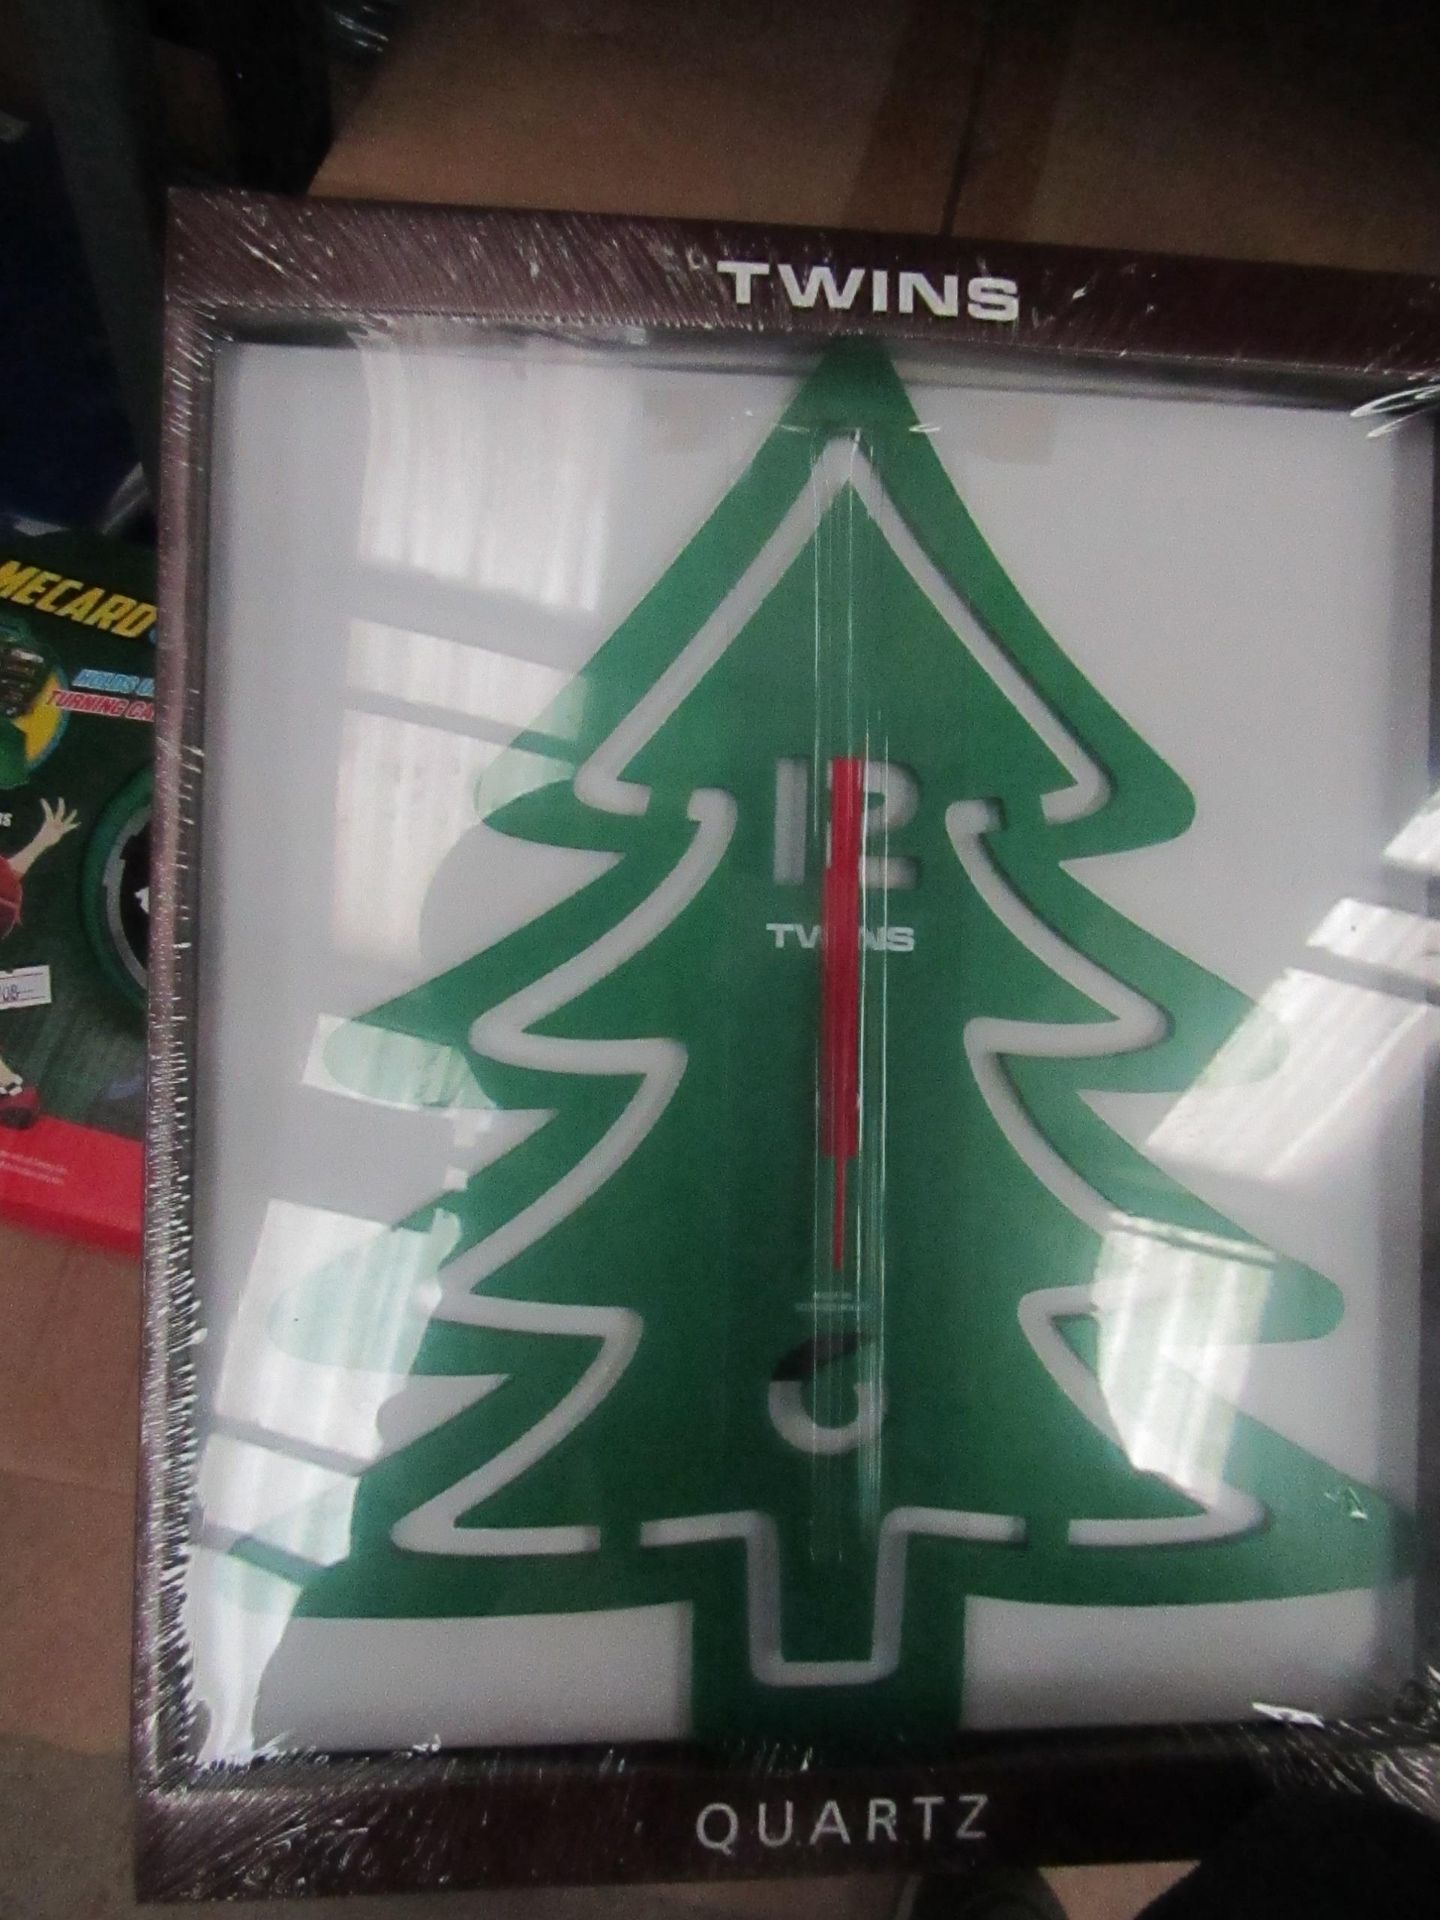 10x Twins - Quartz Green Tree Clocks - Unused, Packaged & Boxed.